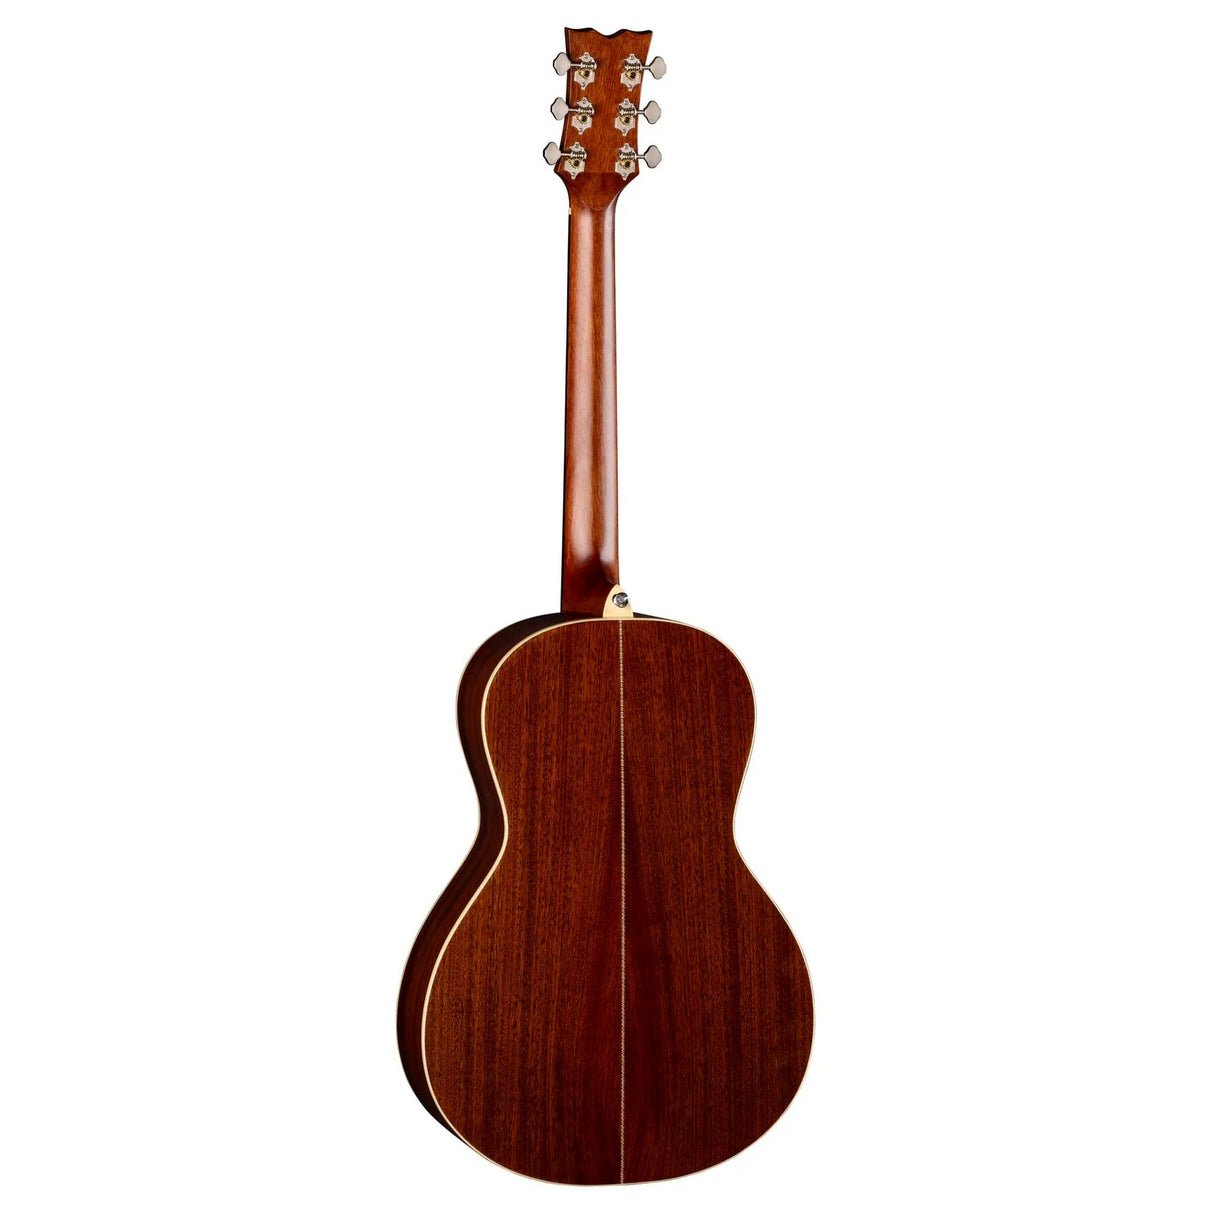 Dean Guitars ST Augustine Elite Parlor Solid Top A/E Mahogany Acoustic/Electric Guitar